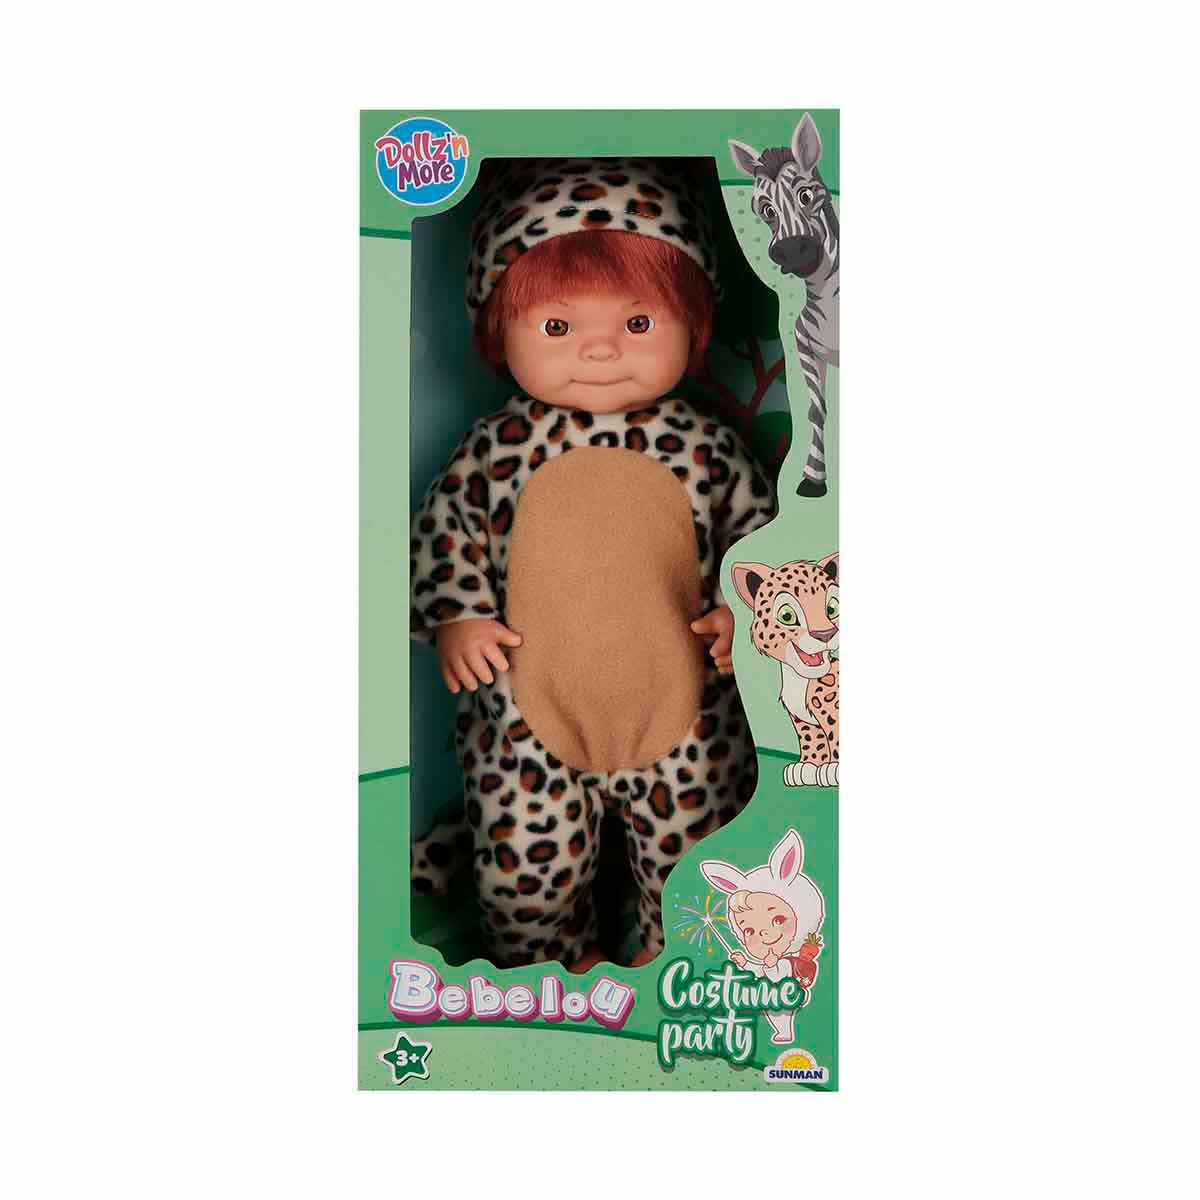 Papusa Bebelou in costum de leopard, Dollz And More, 40 cm